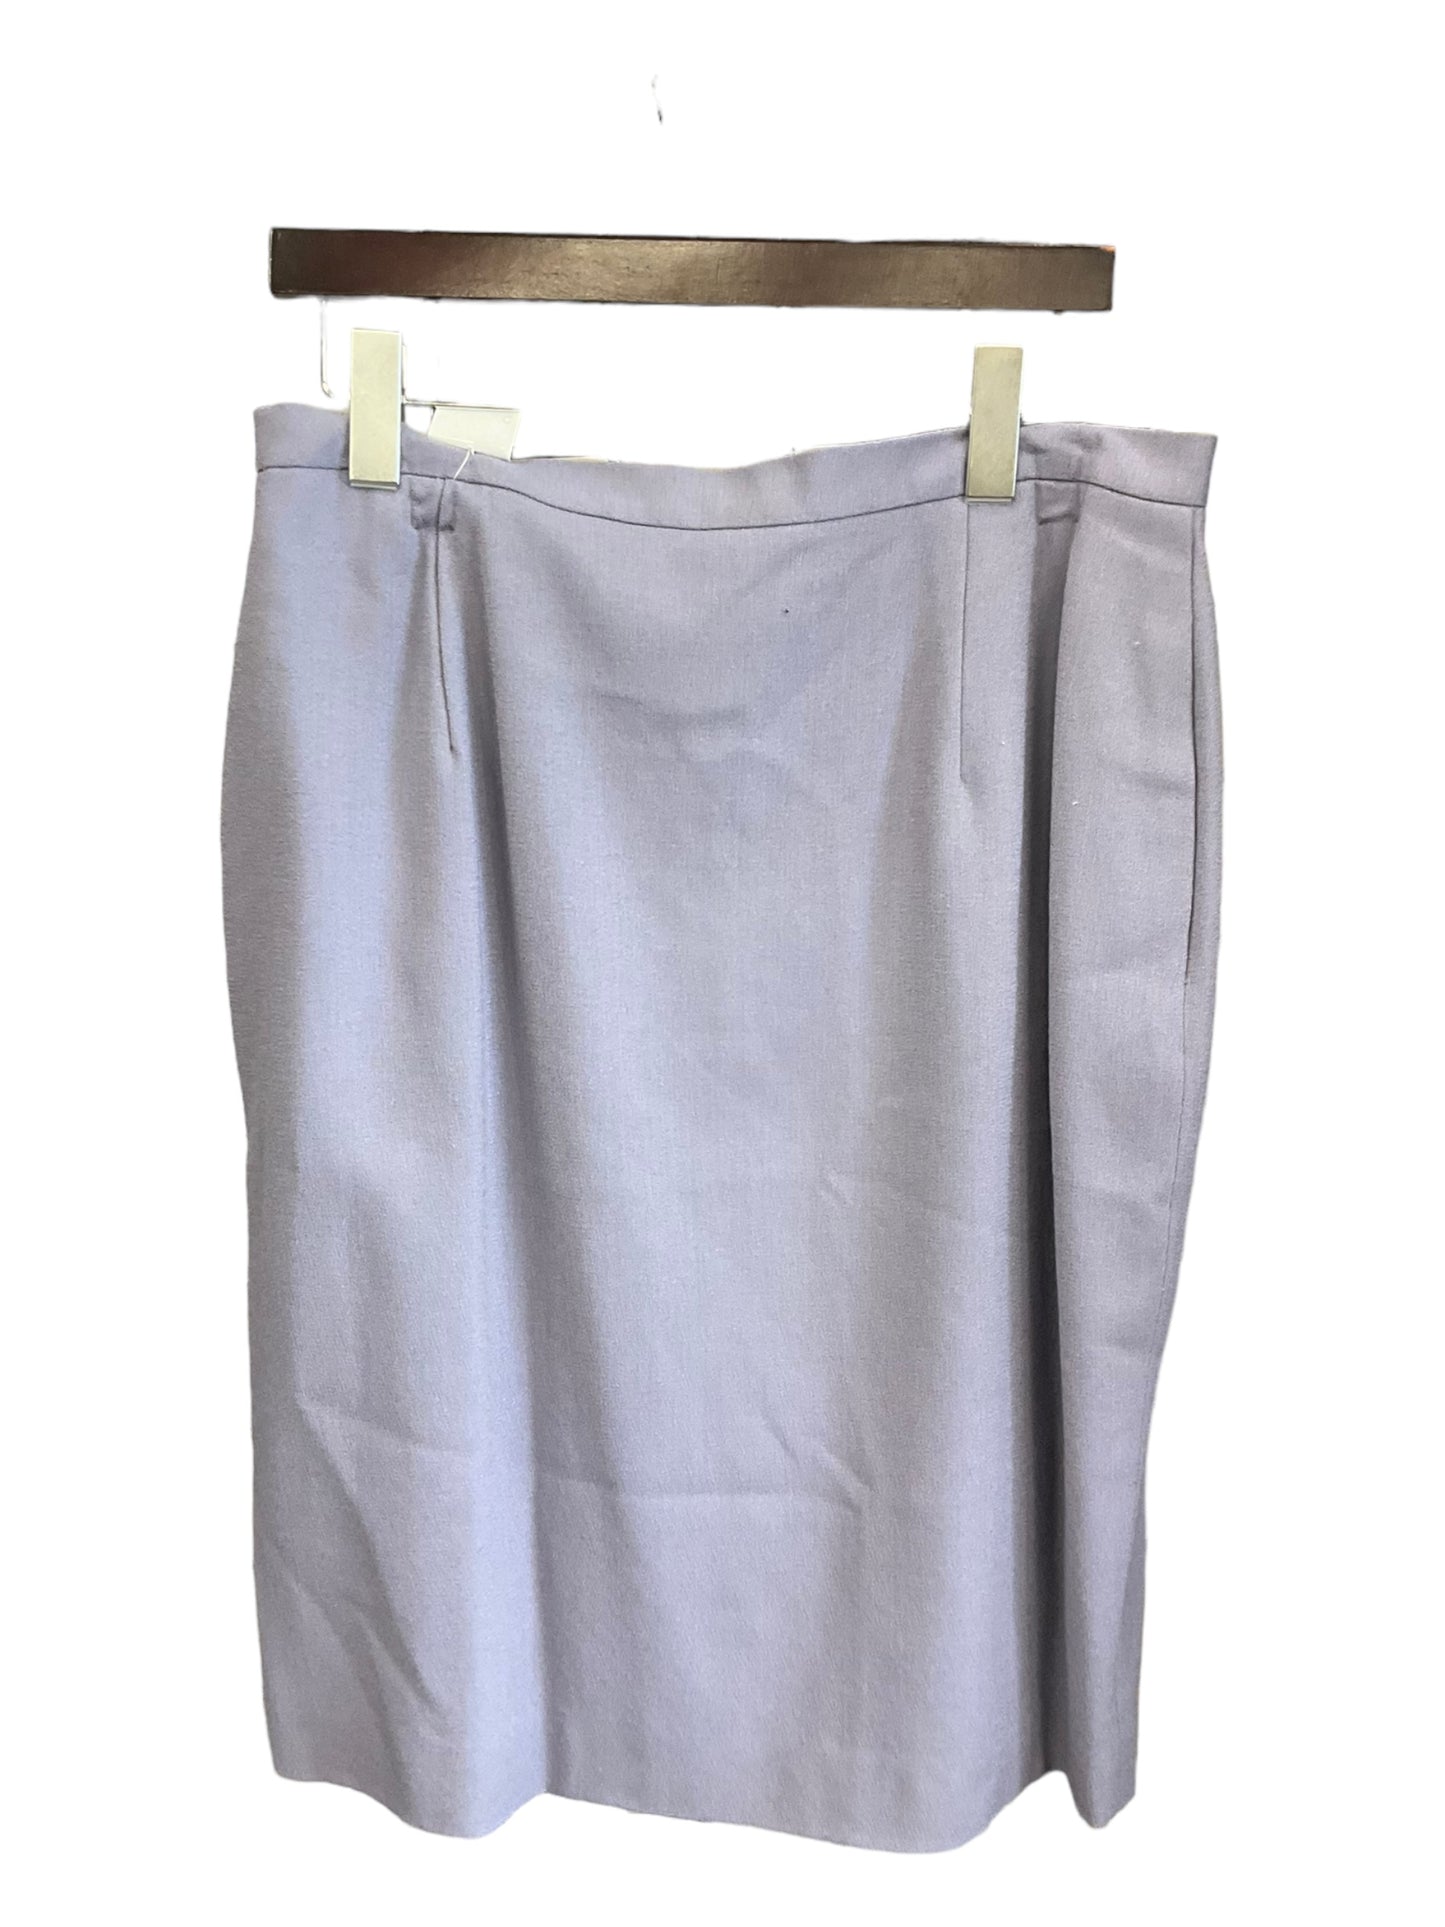 Skirt Suit 2pc By Jones New York  Size: 16